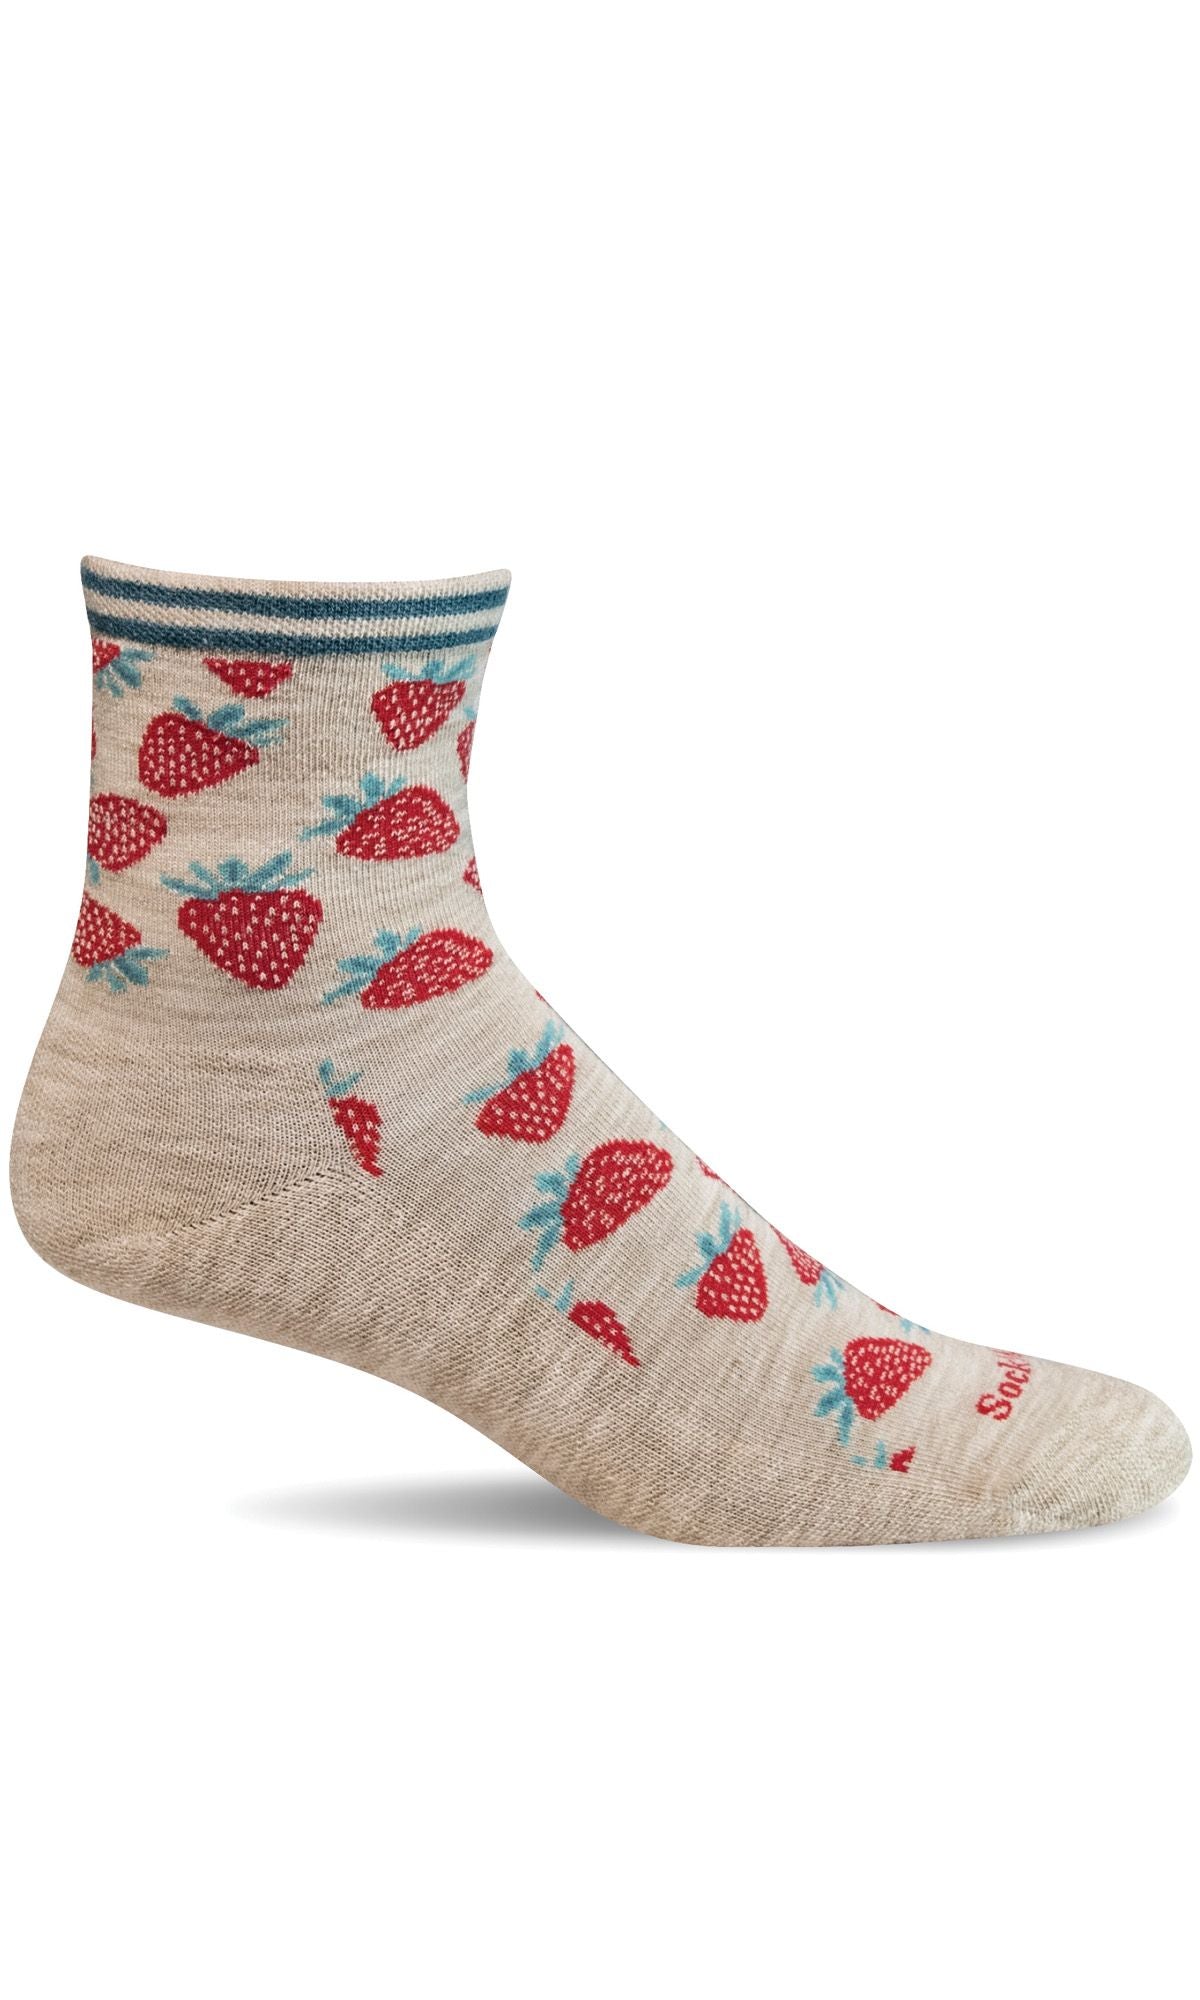 Sockwell Strawberry Essential Comfort Socks (Women’s)